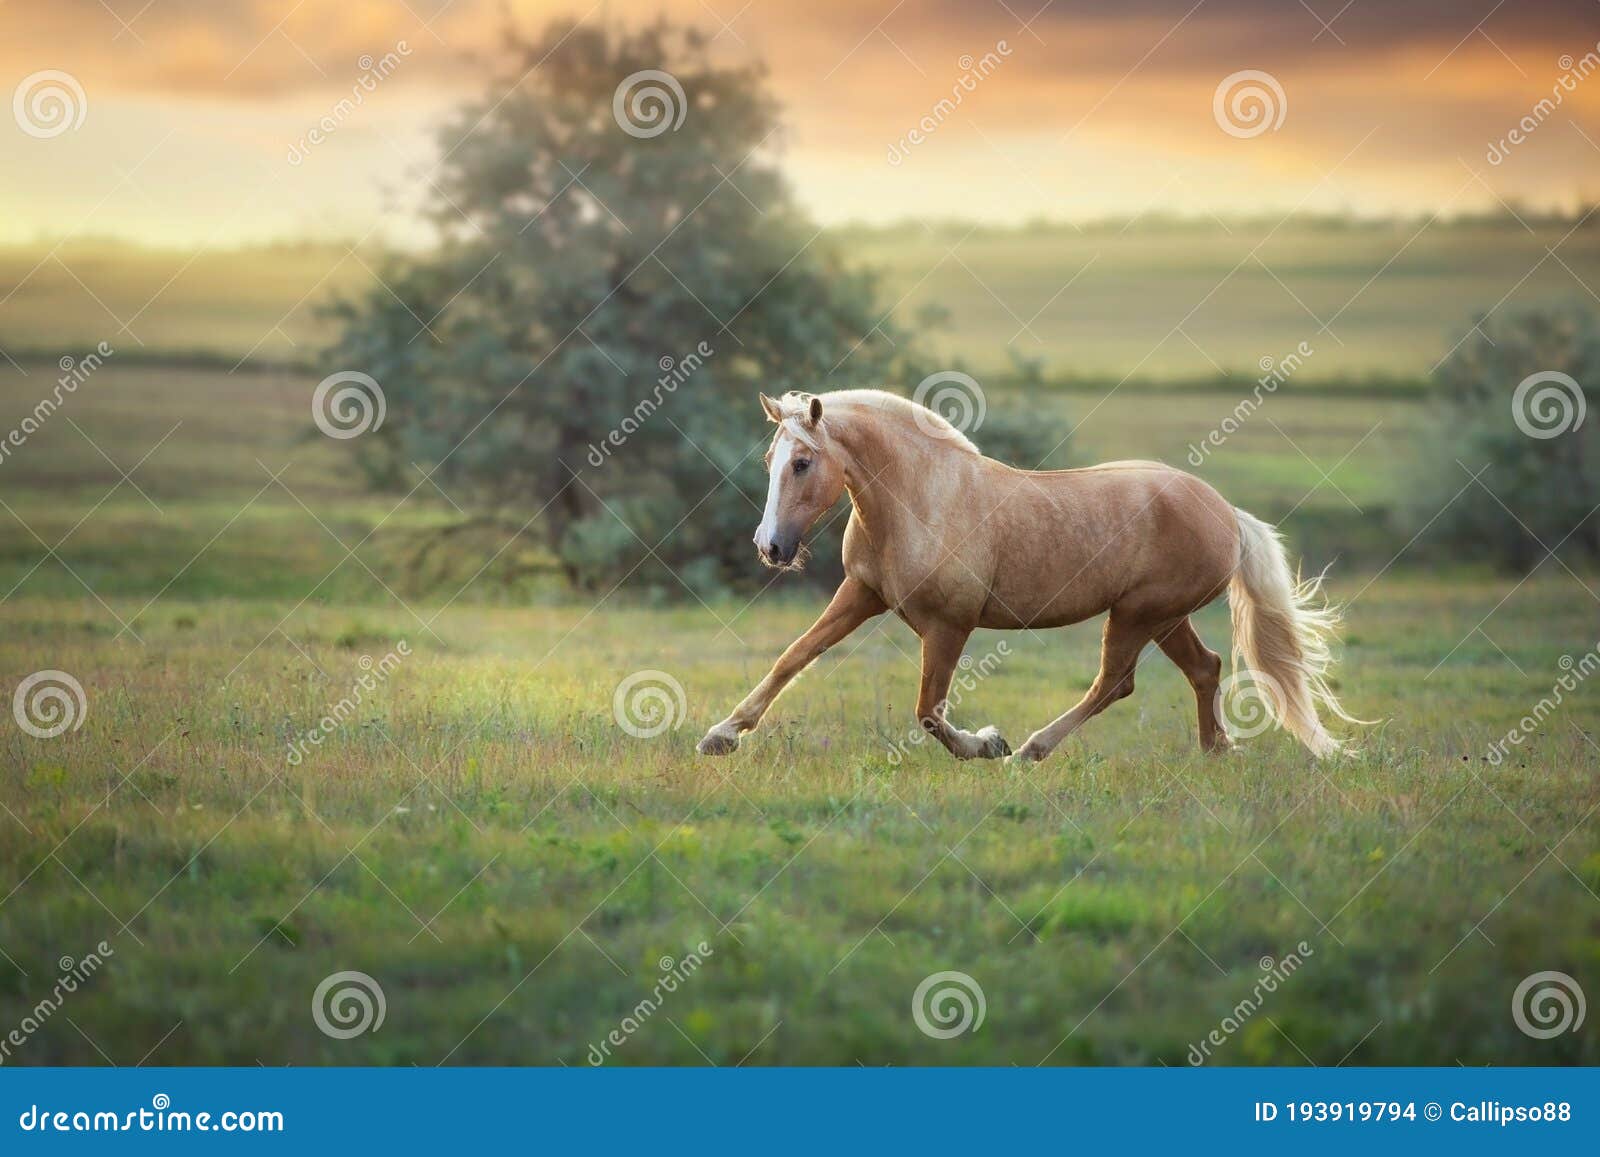 palomino horse trotting